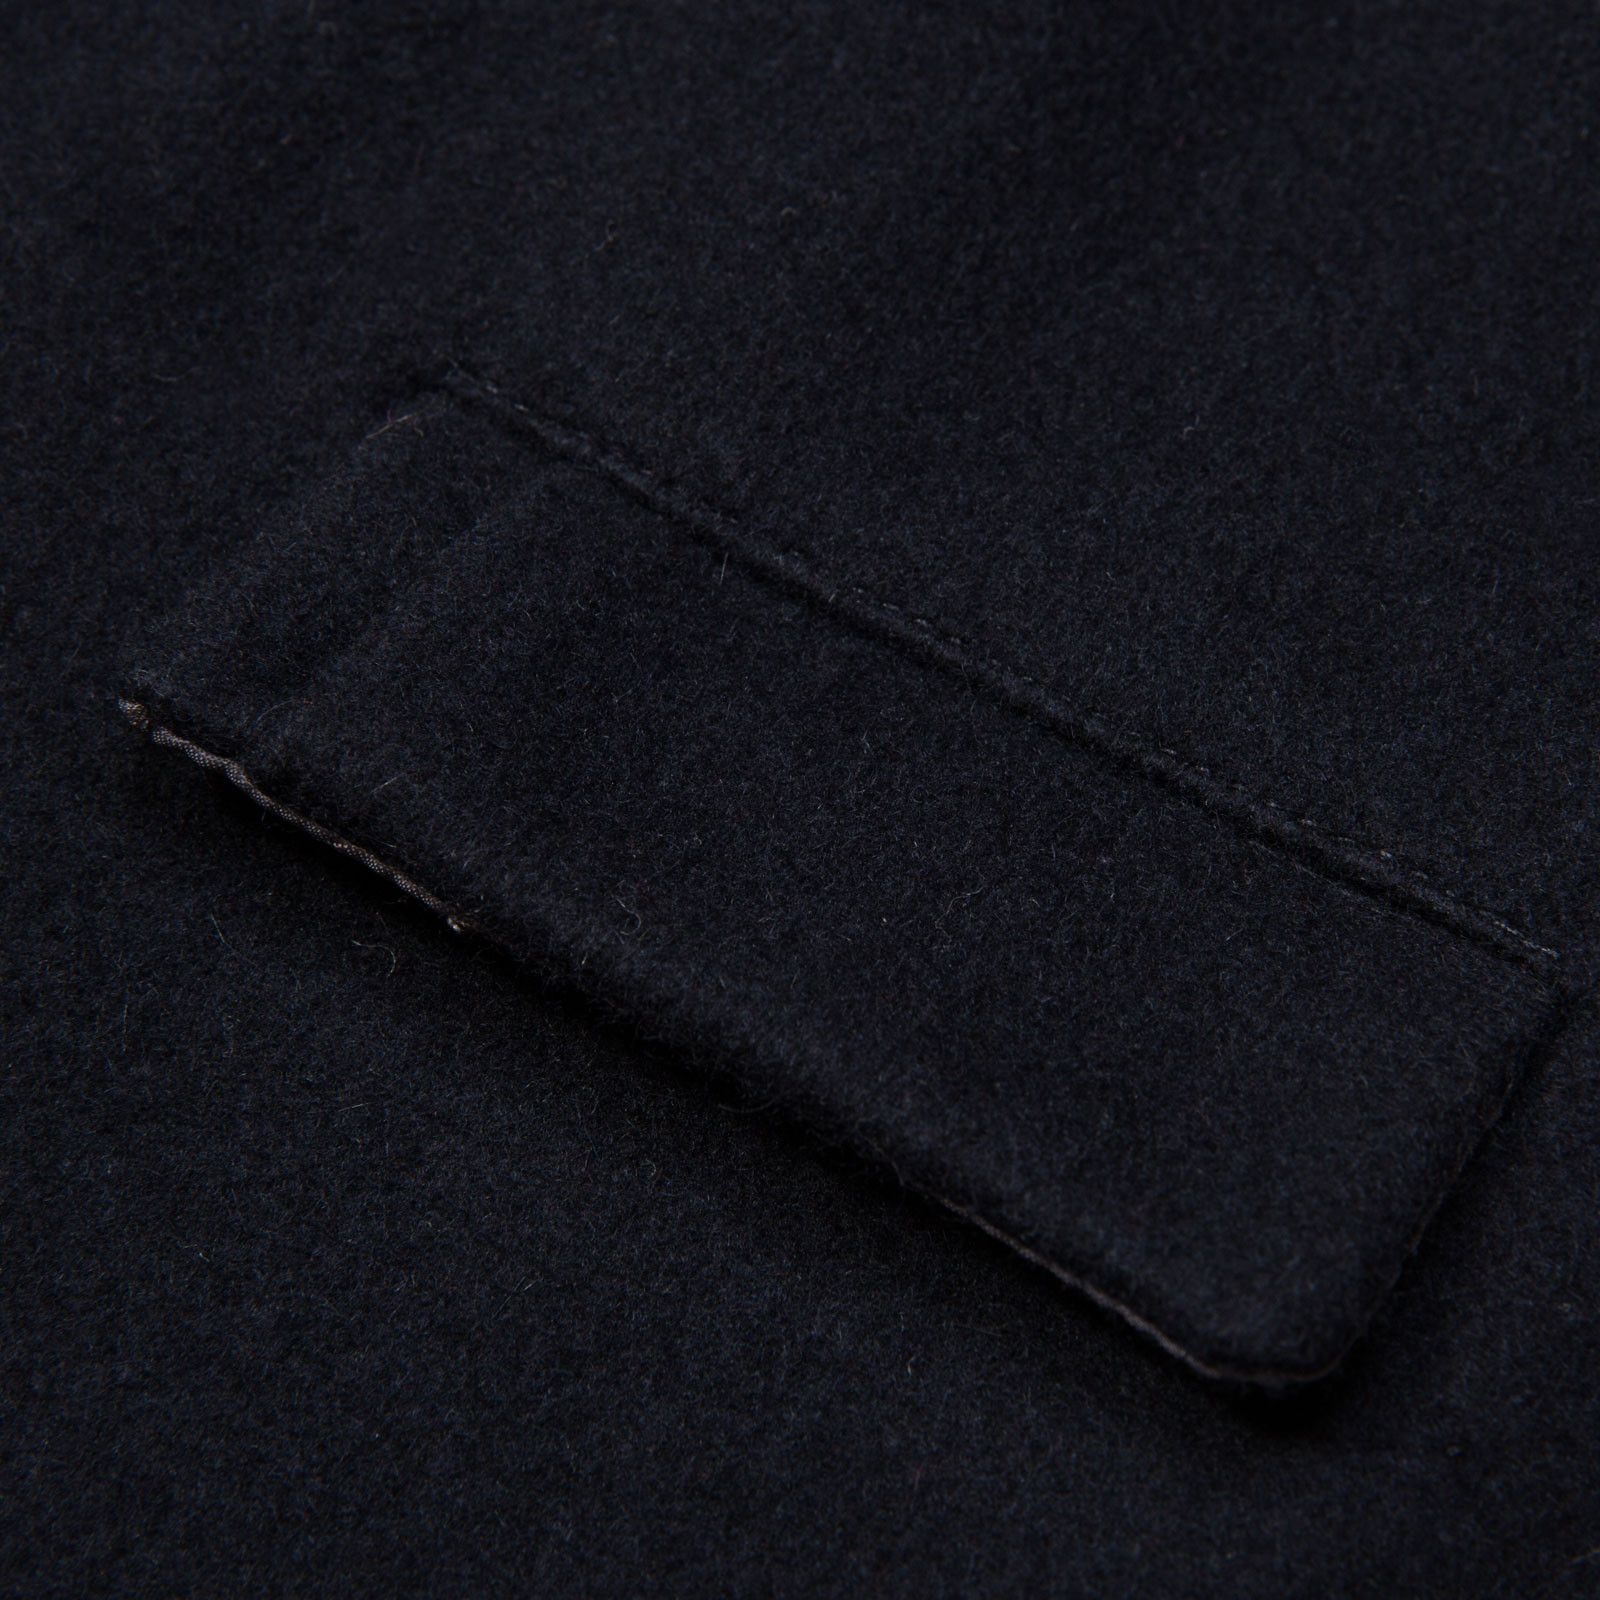 Girls Black Padded Coat With Fur Collar - CÉMAROSE | Children's Fashion Store - 4